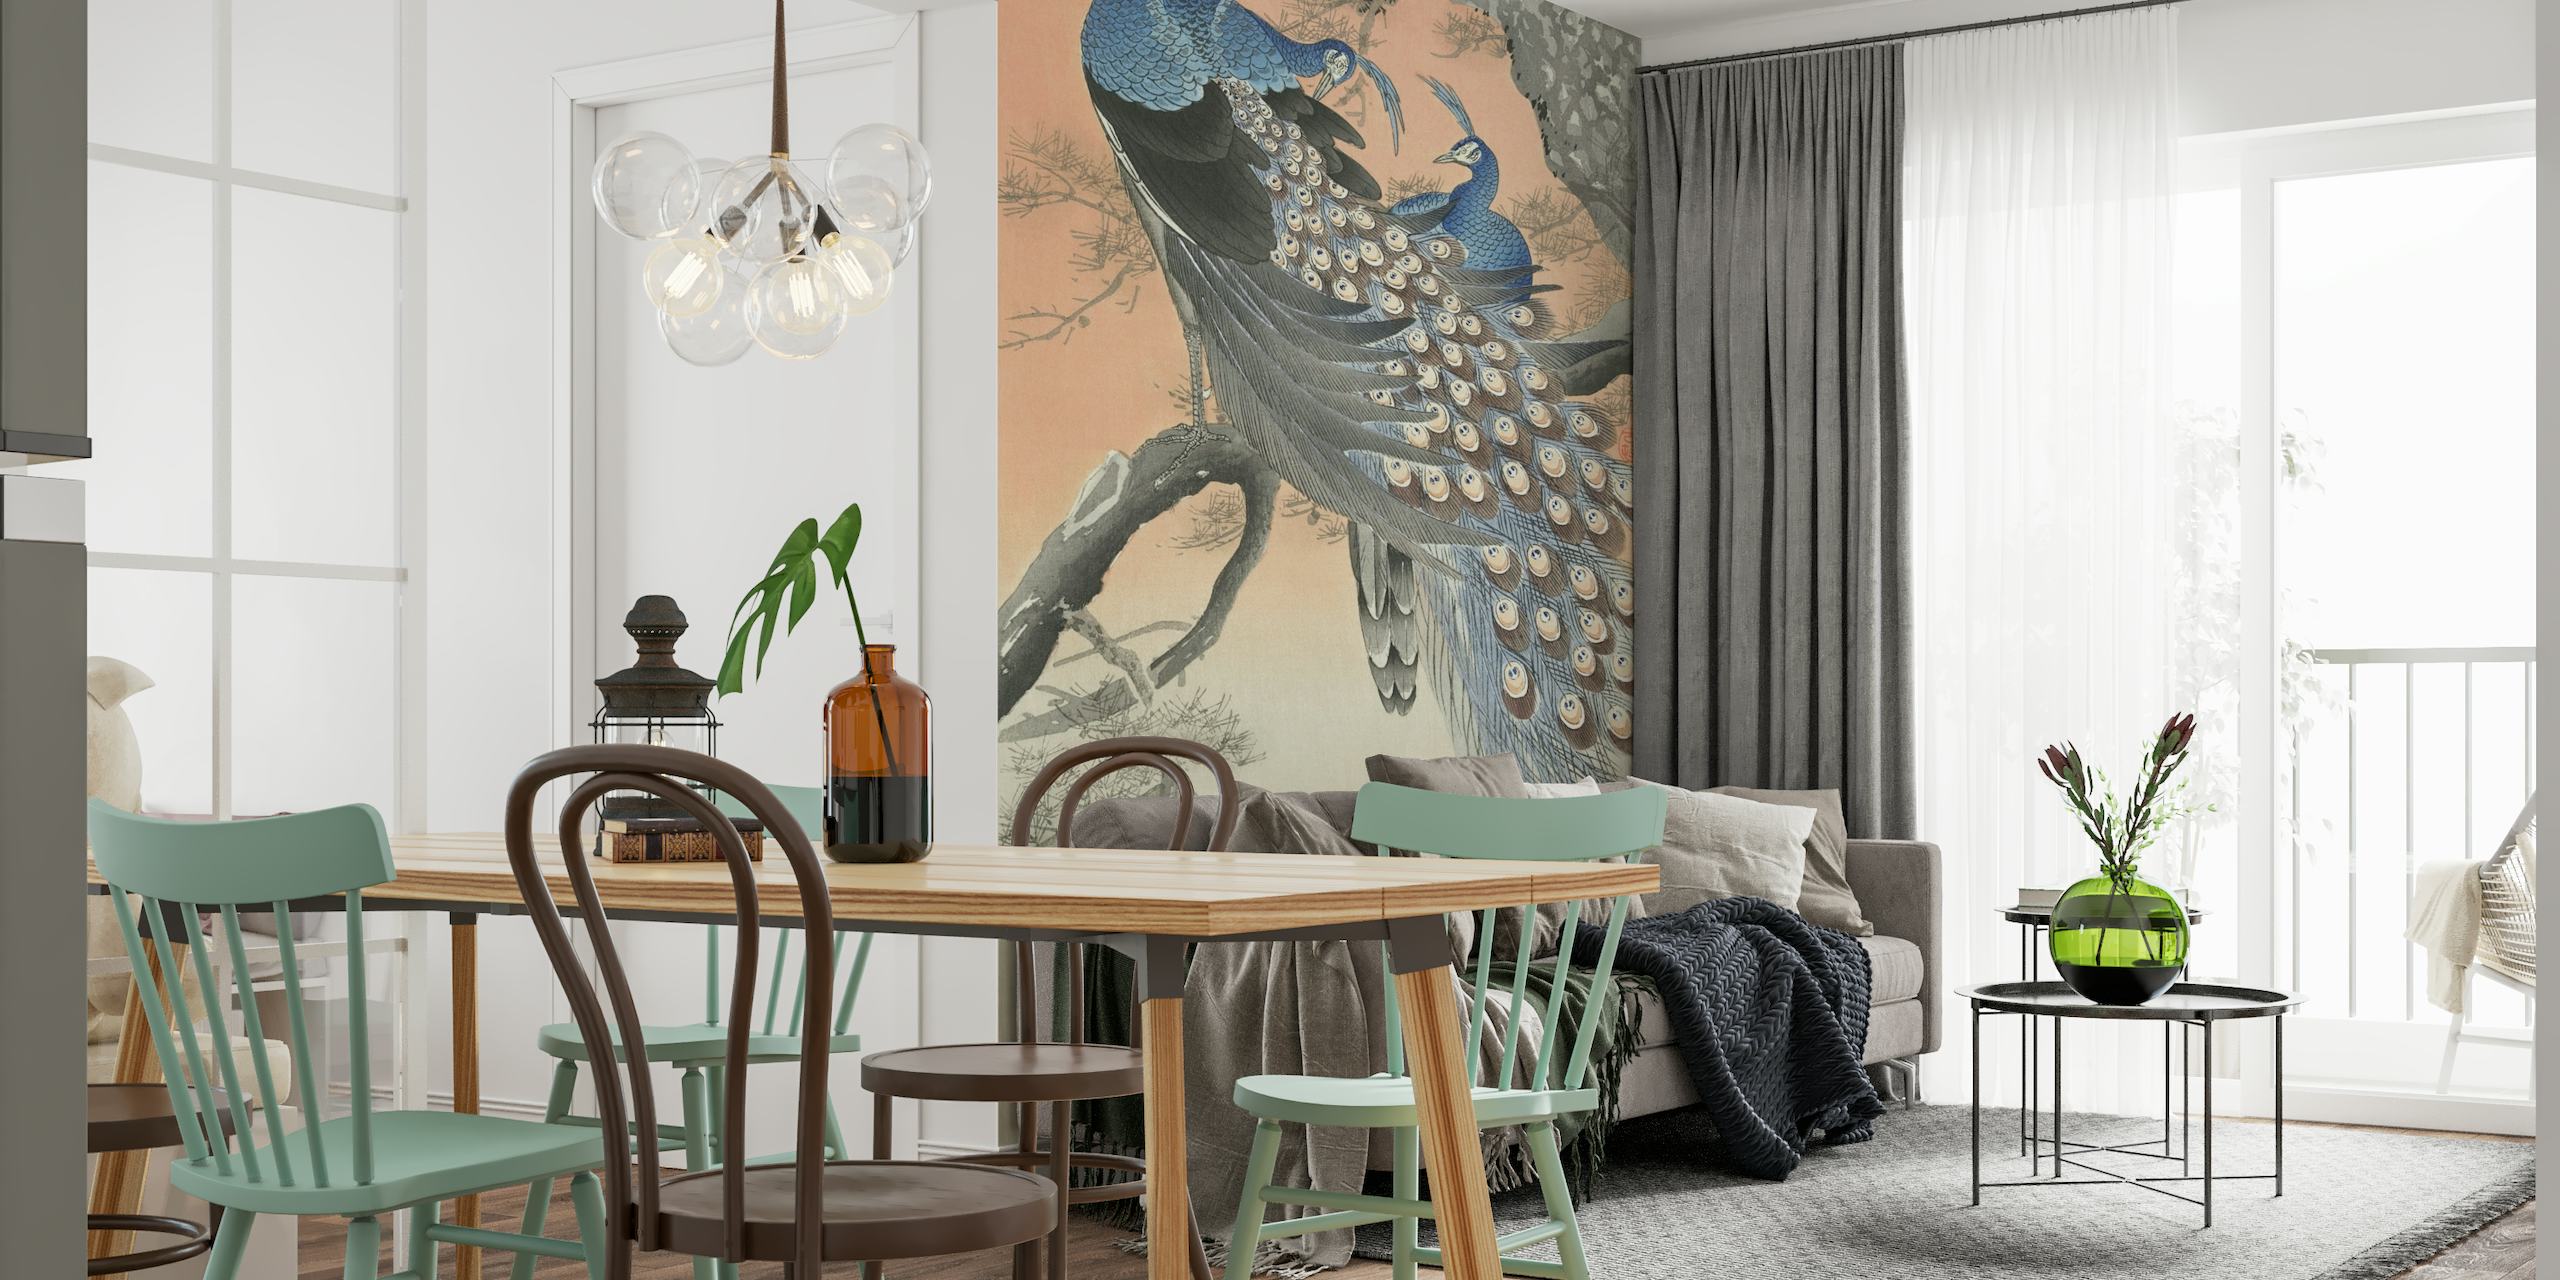 Peacocks wallpaper